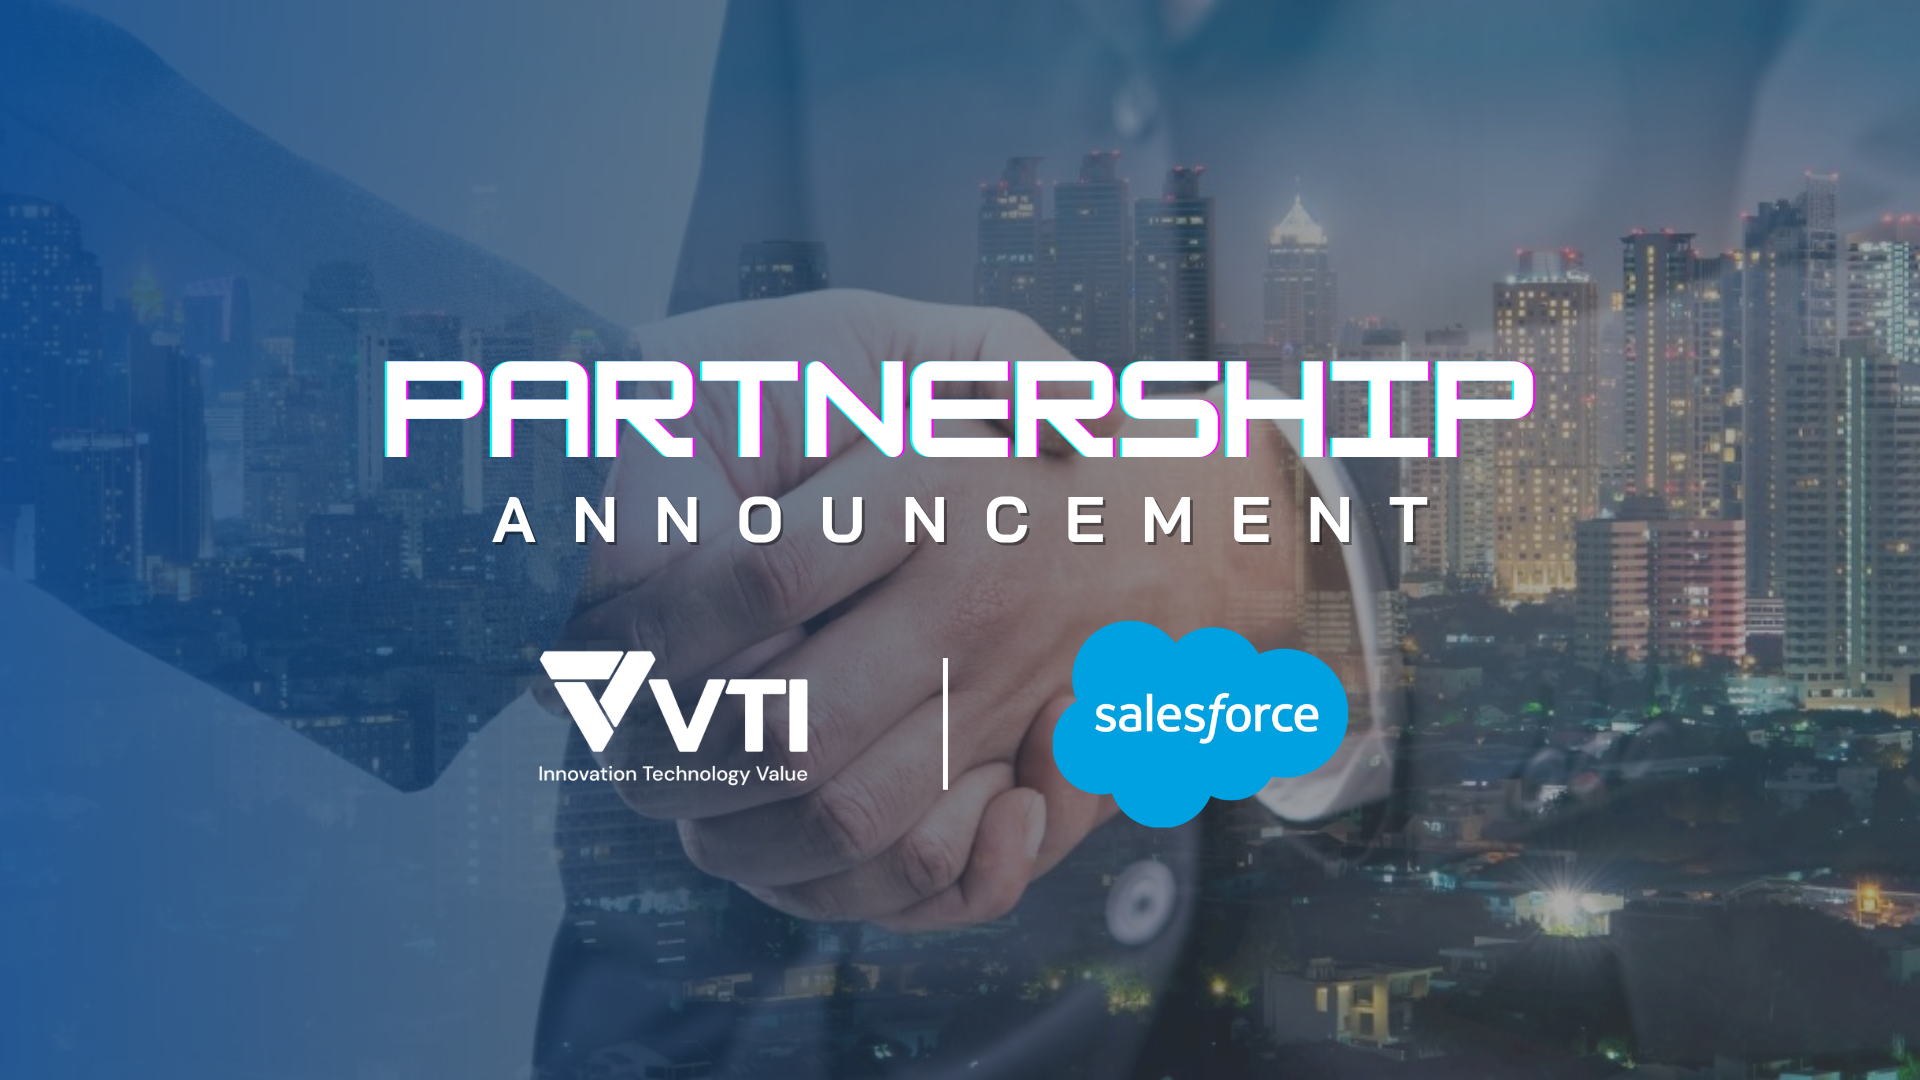 vti salesforce partner VTI 세일즈포스와 파트너십